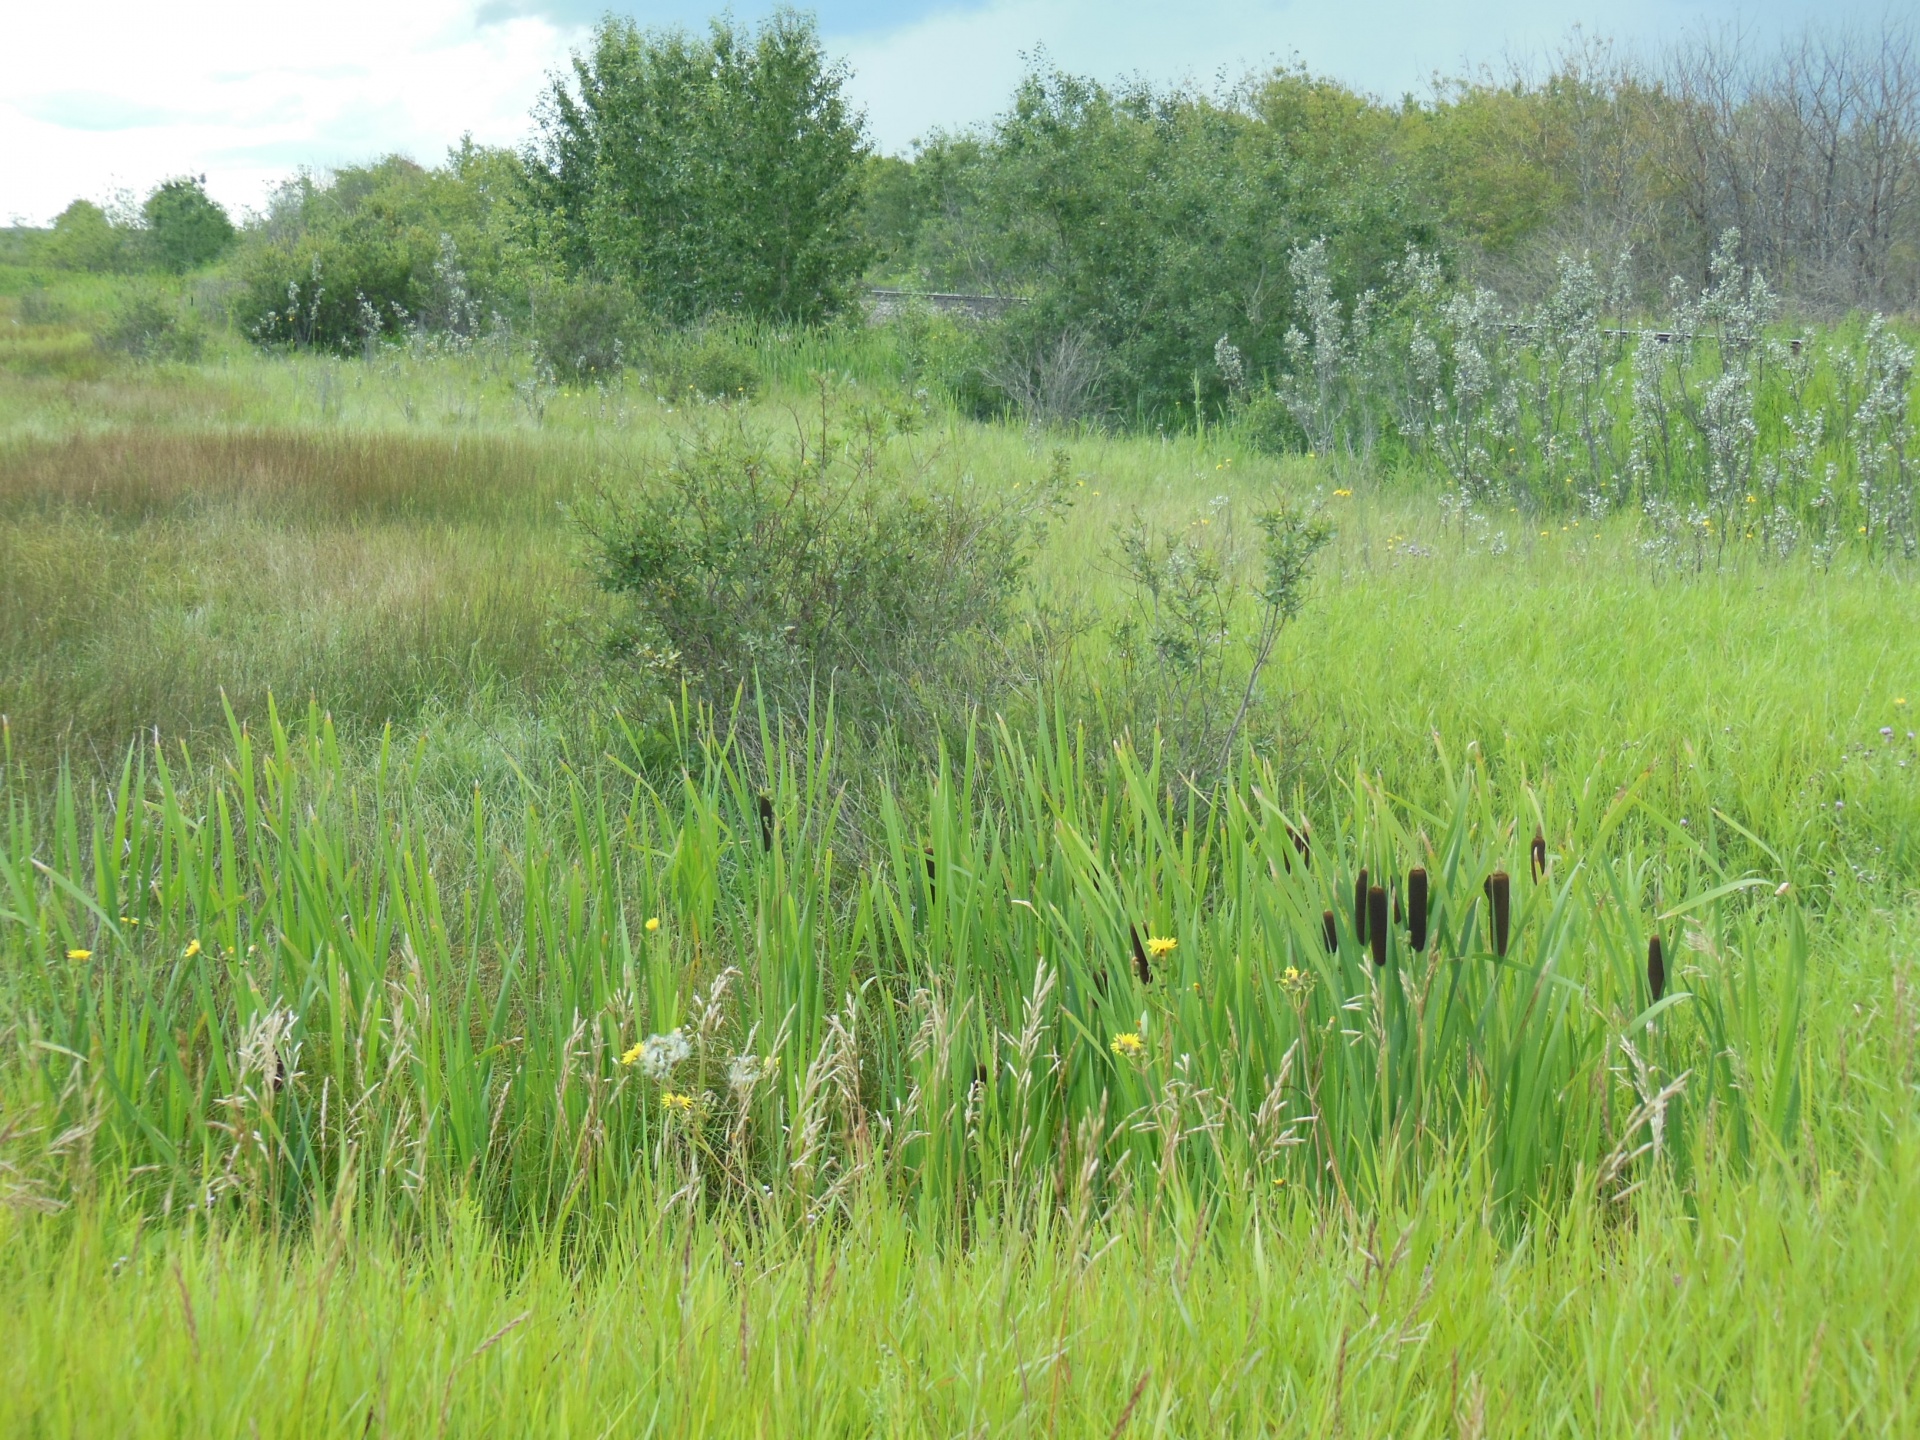 Summer grasses on the prairies